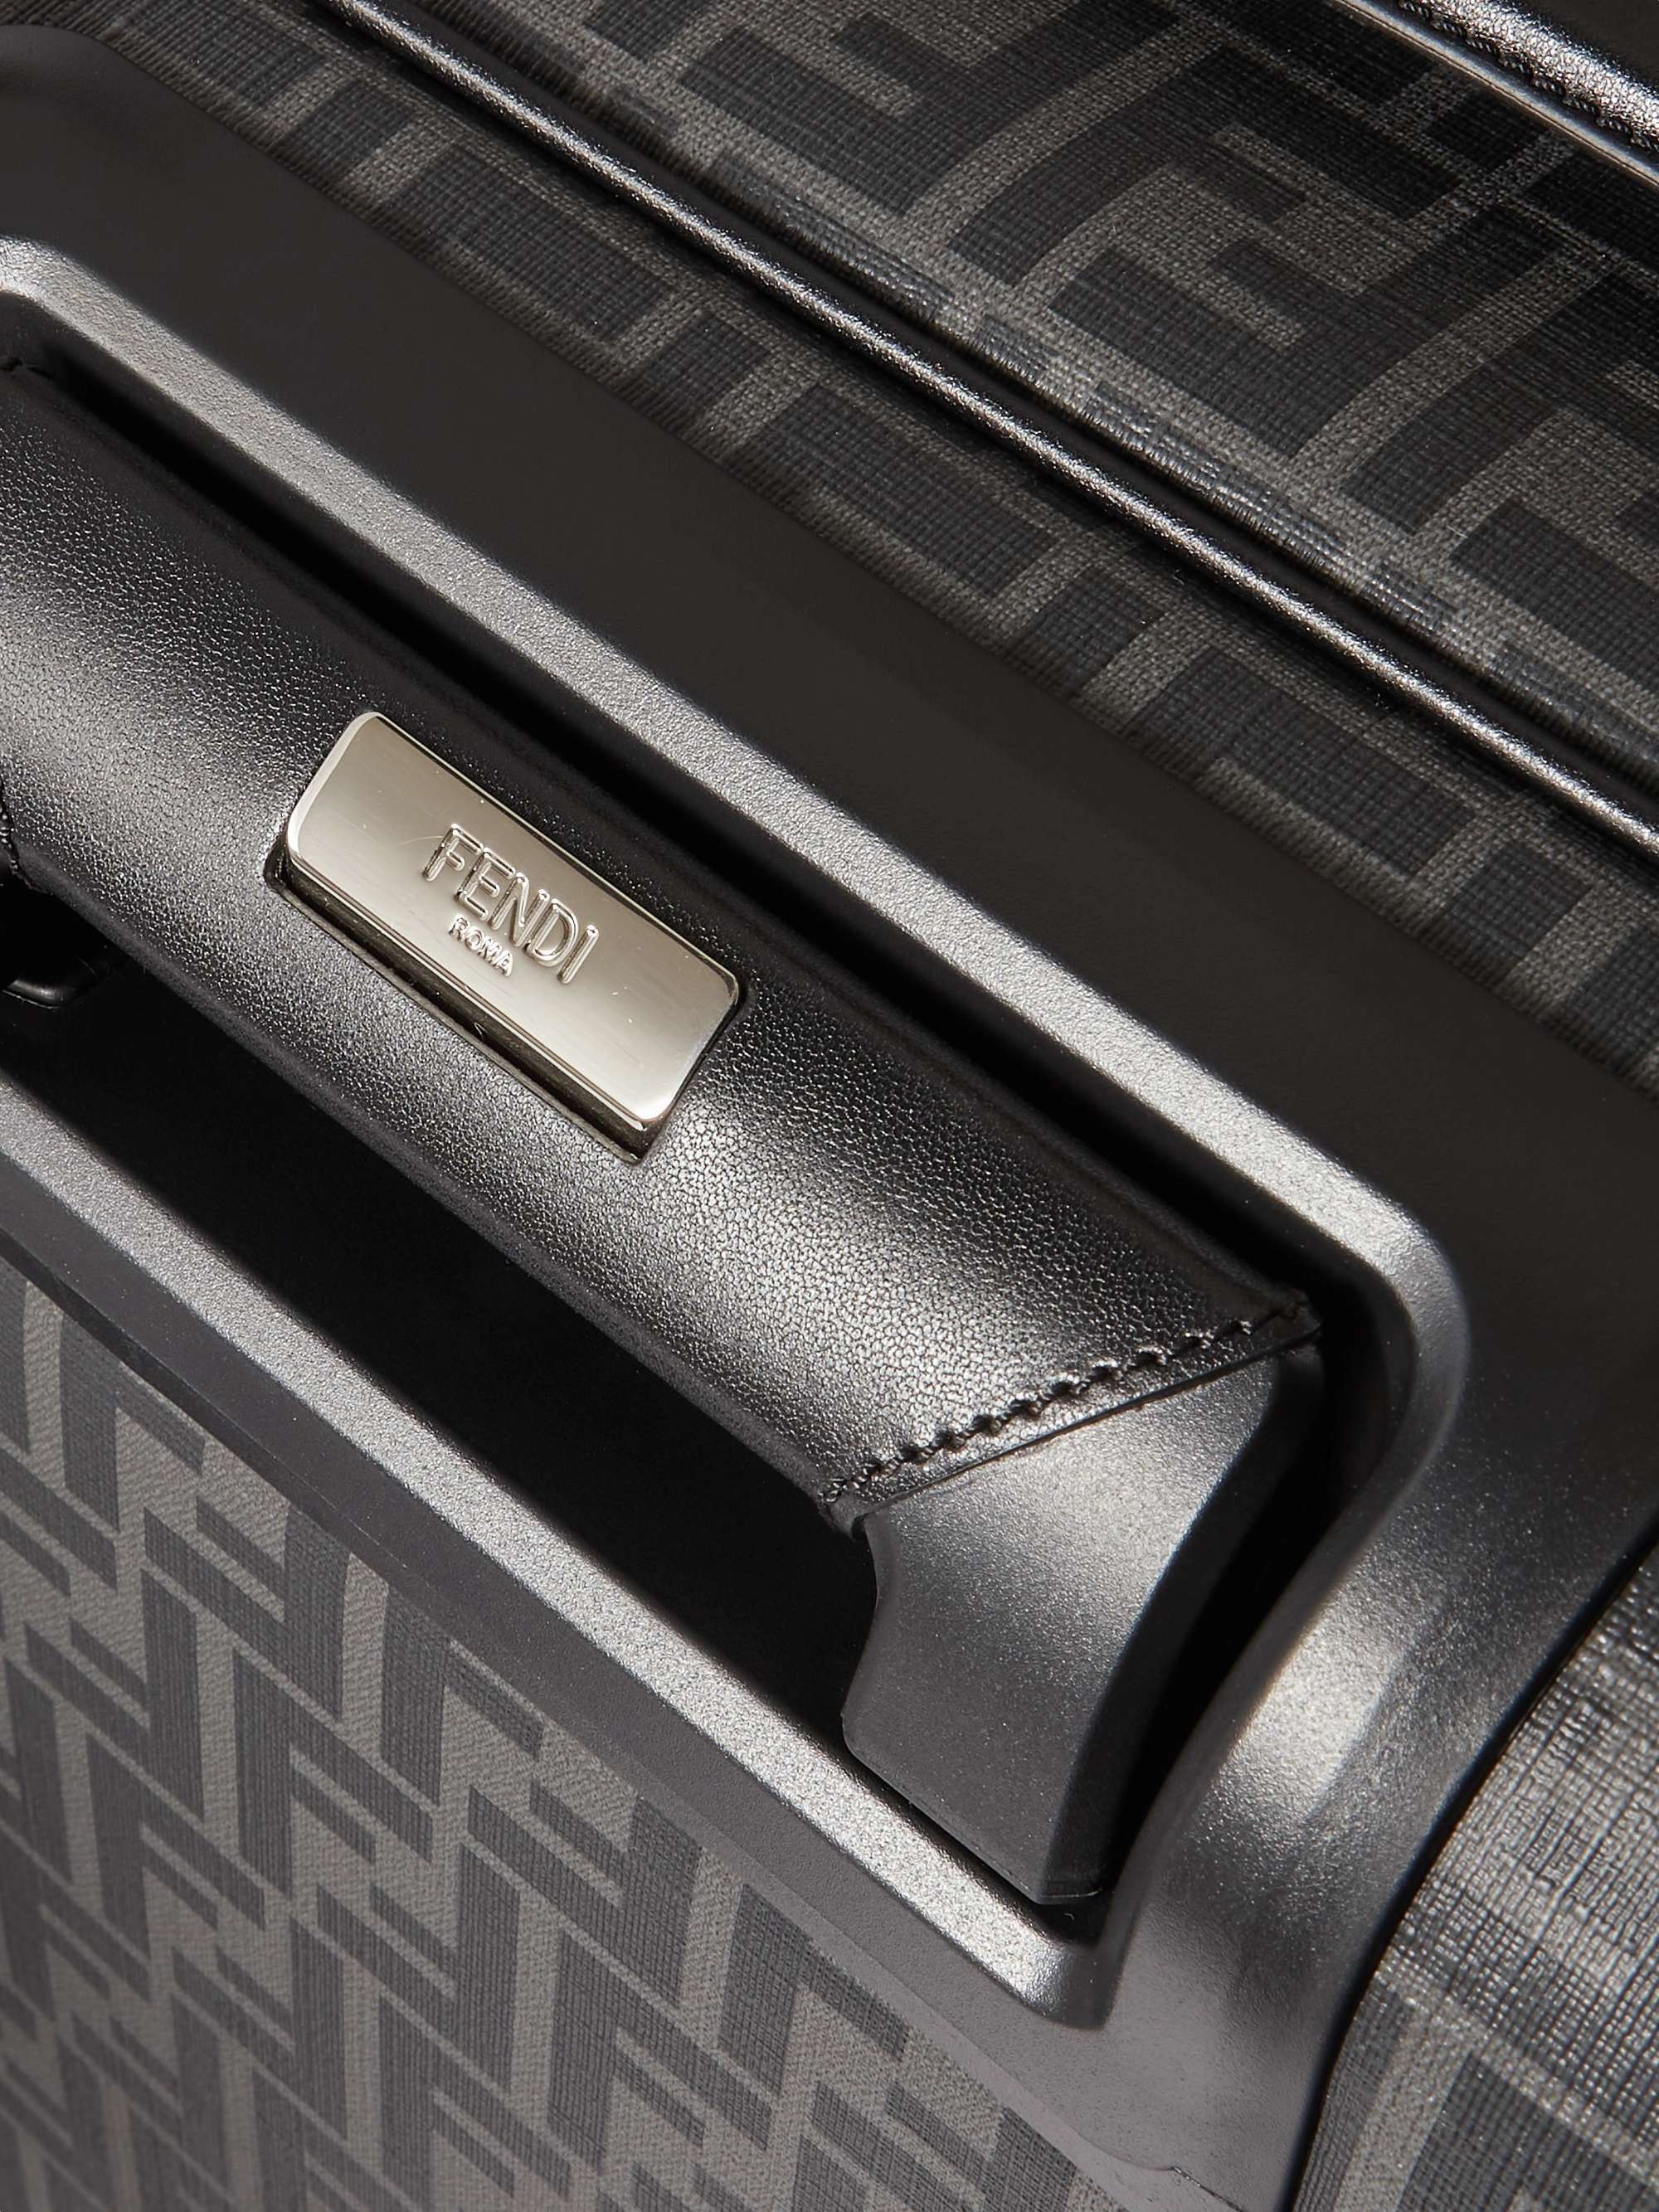 FENDI Leather-Trimmed Logo-Jacquard Canvas Suitcase